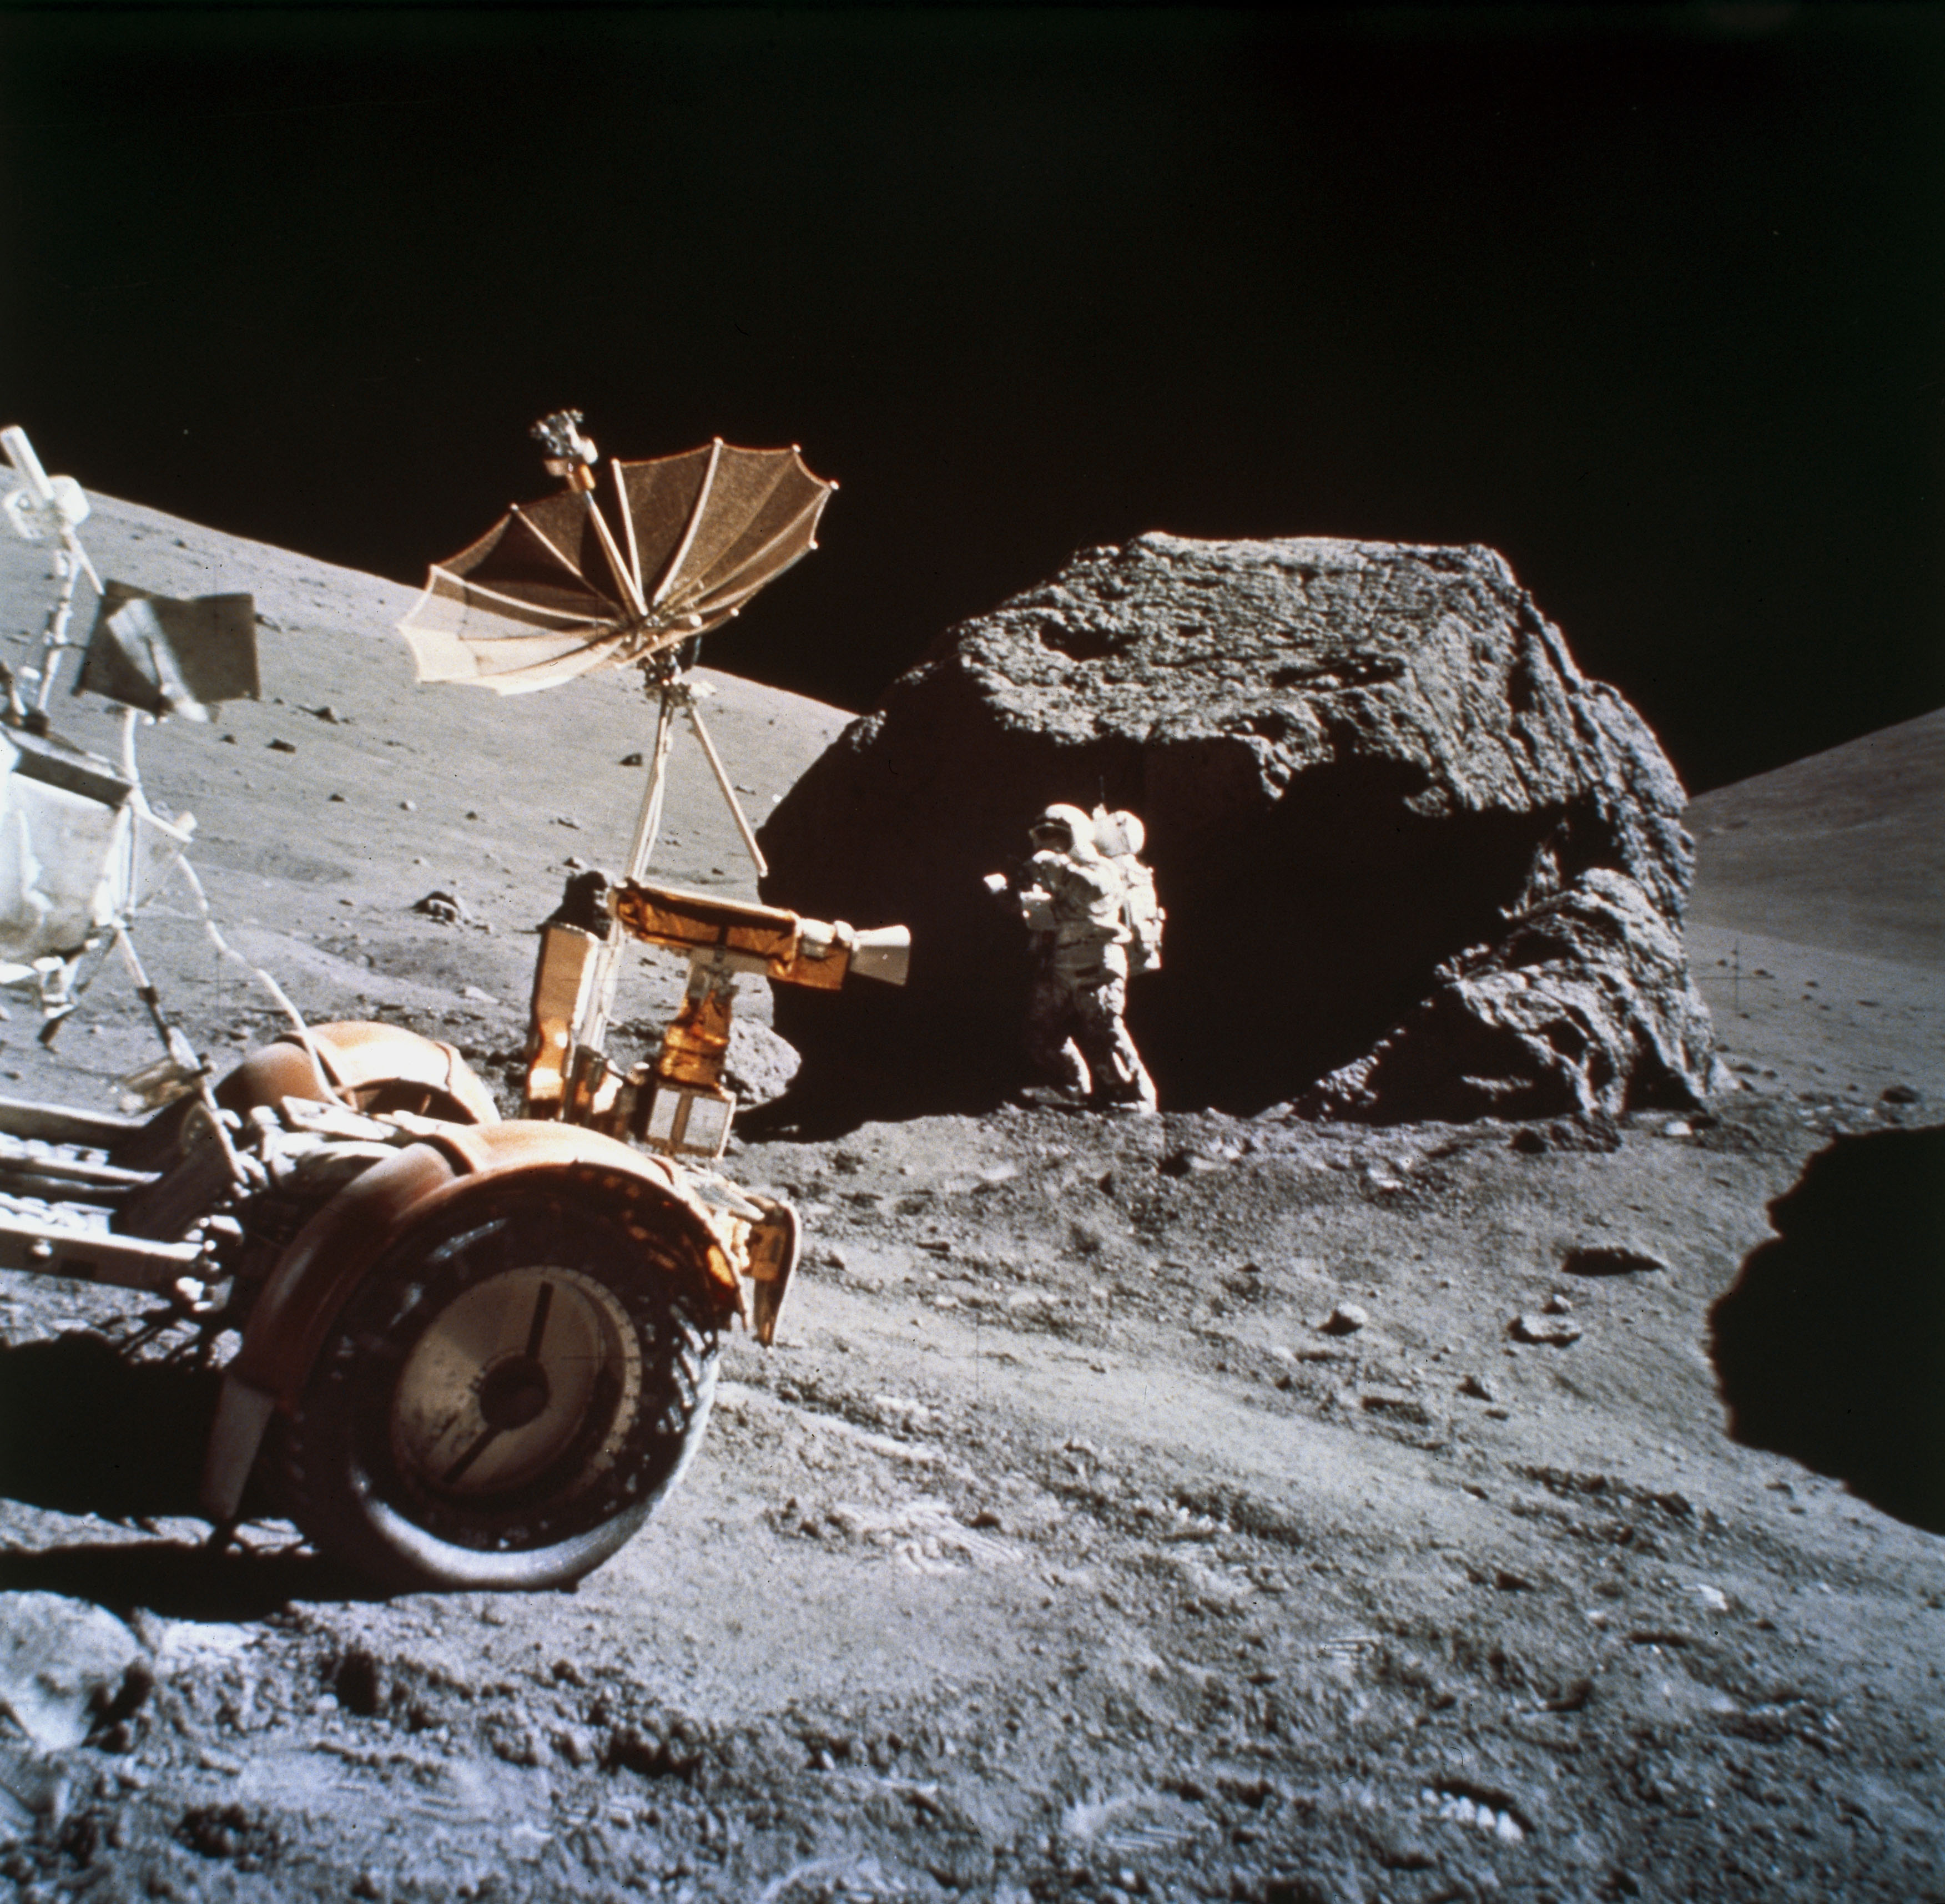 Apollo 17 astronaut Harrison Schmitt collecting samples